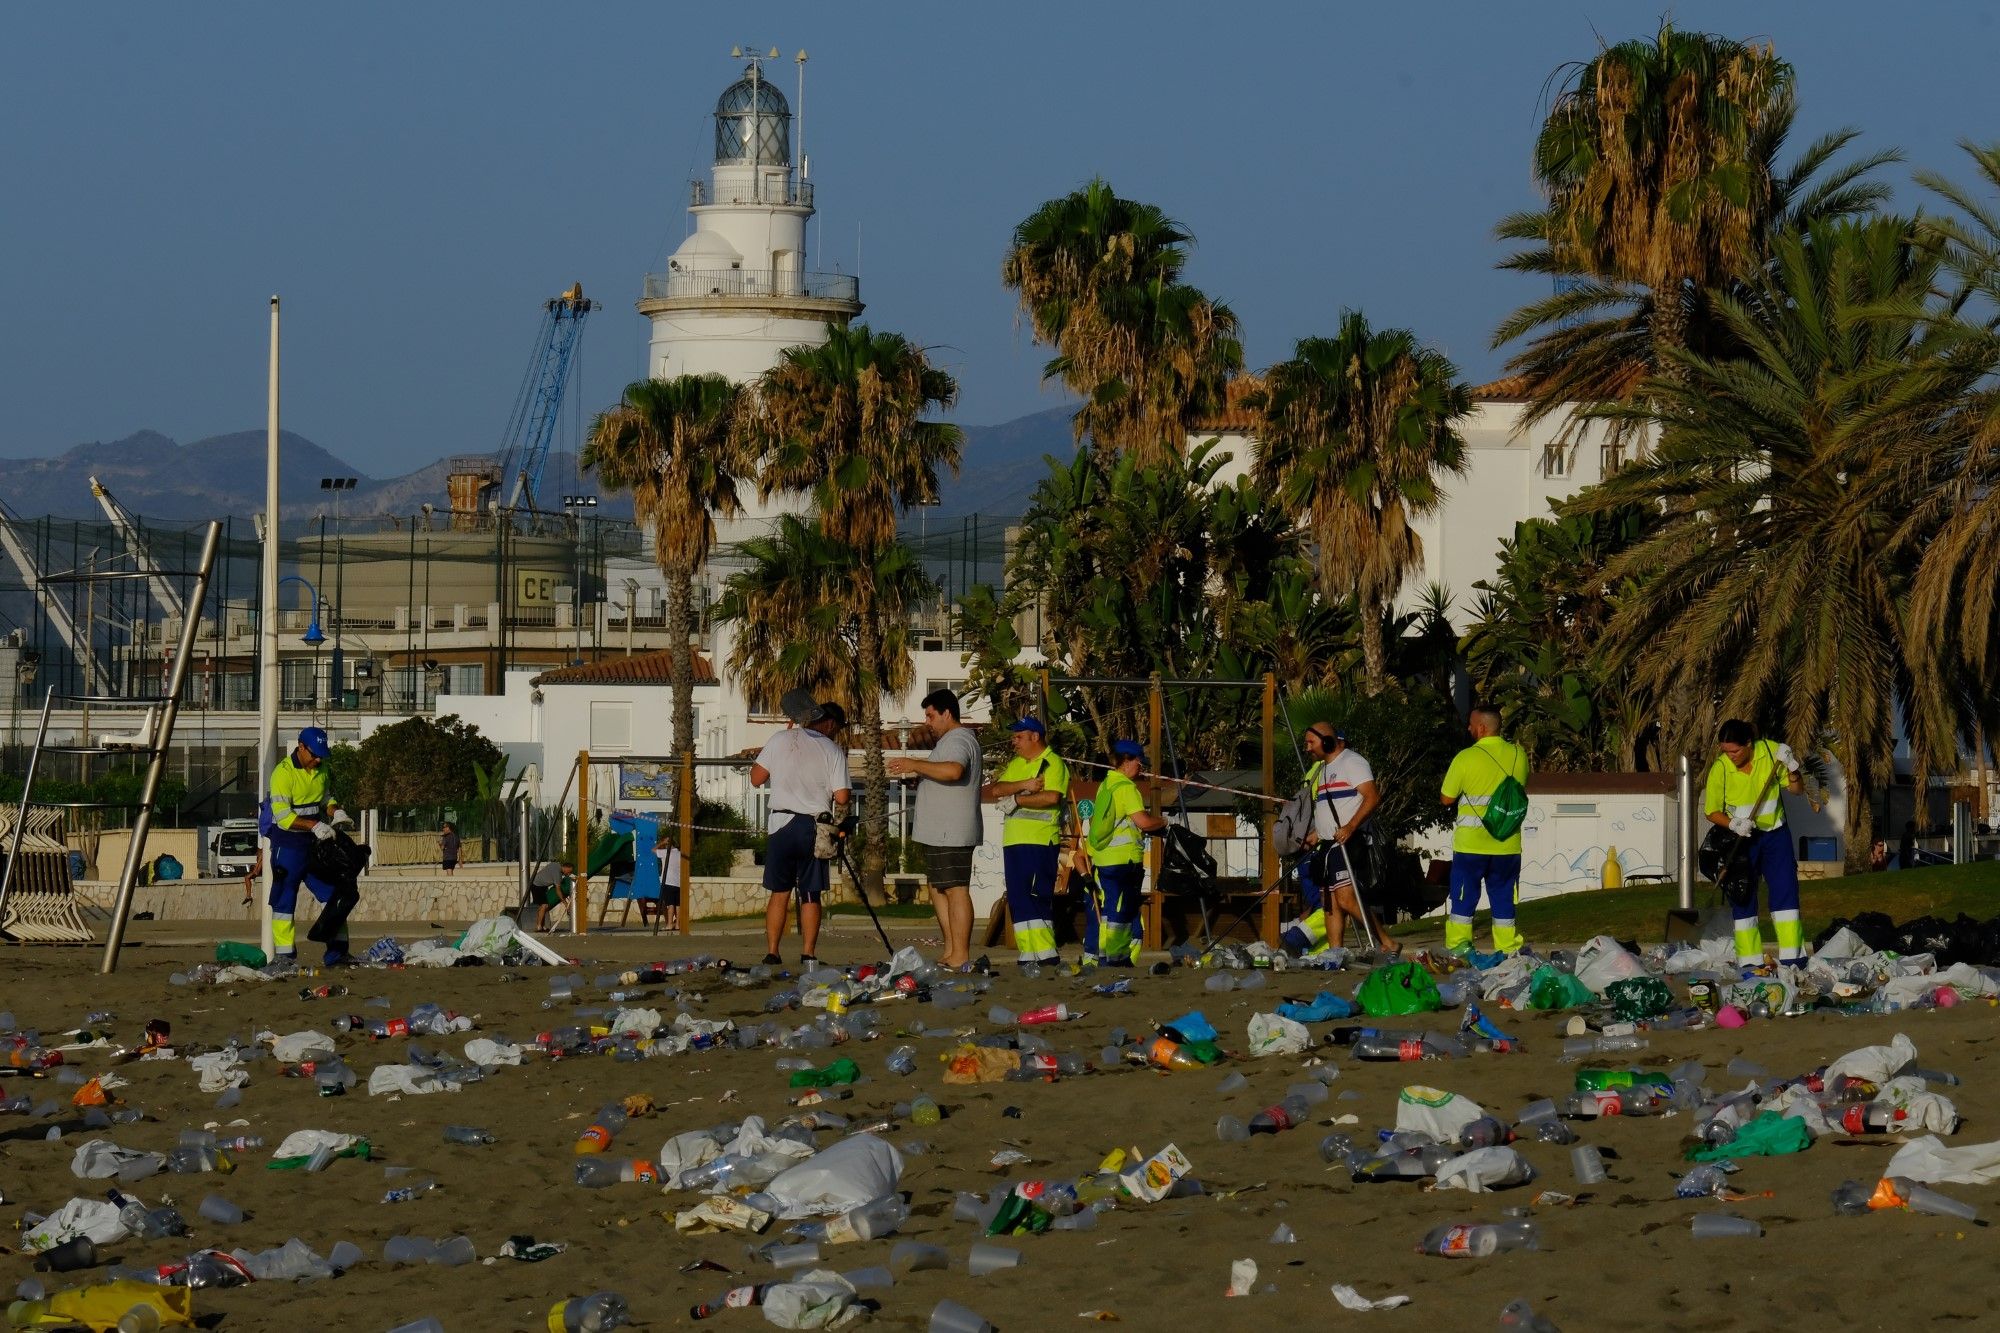 Toneladas de basura se acumulan en la playa tras celebrar la Noche de San Juan